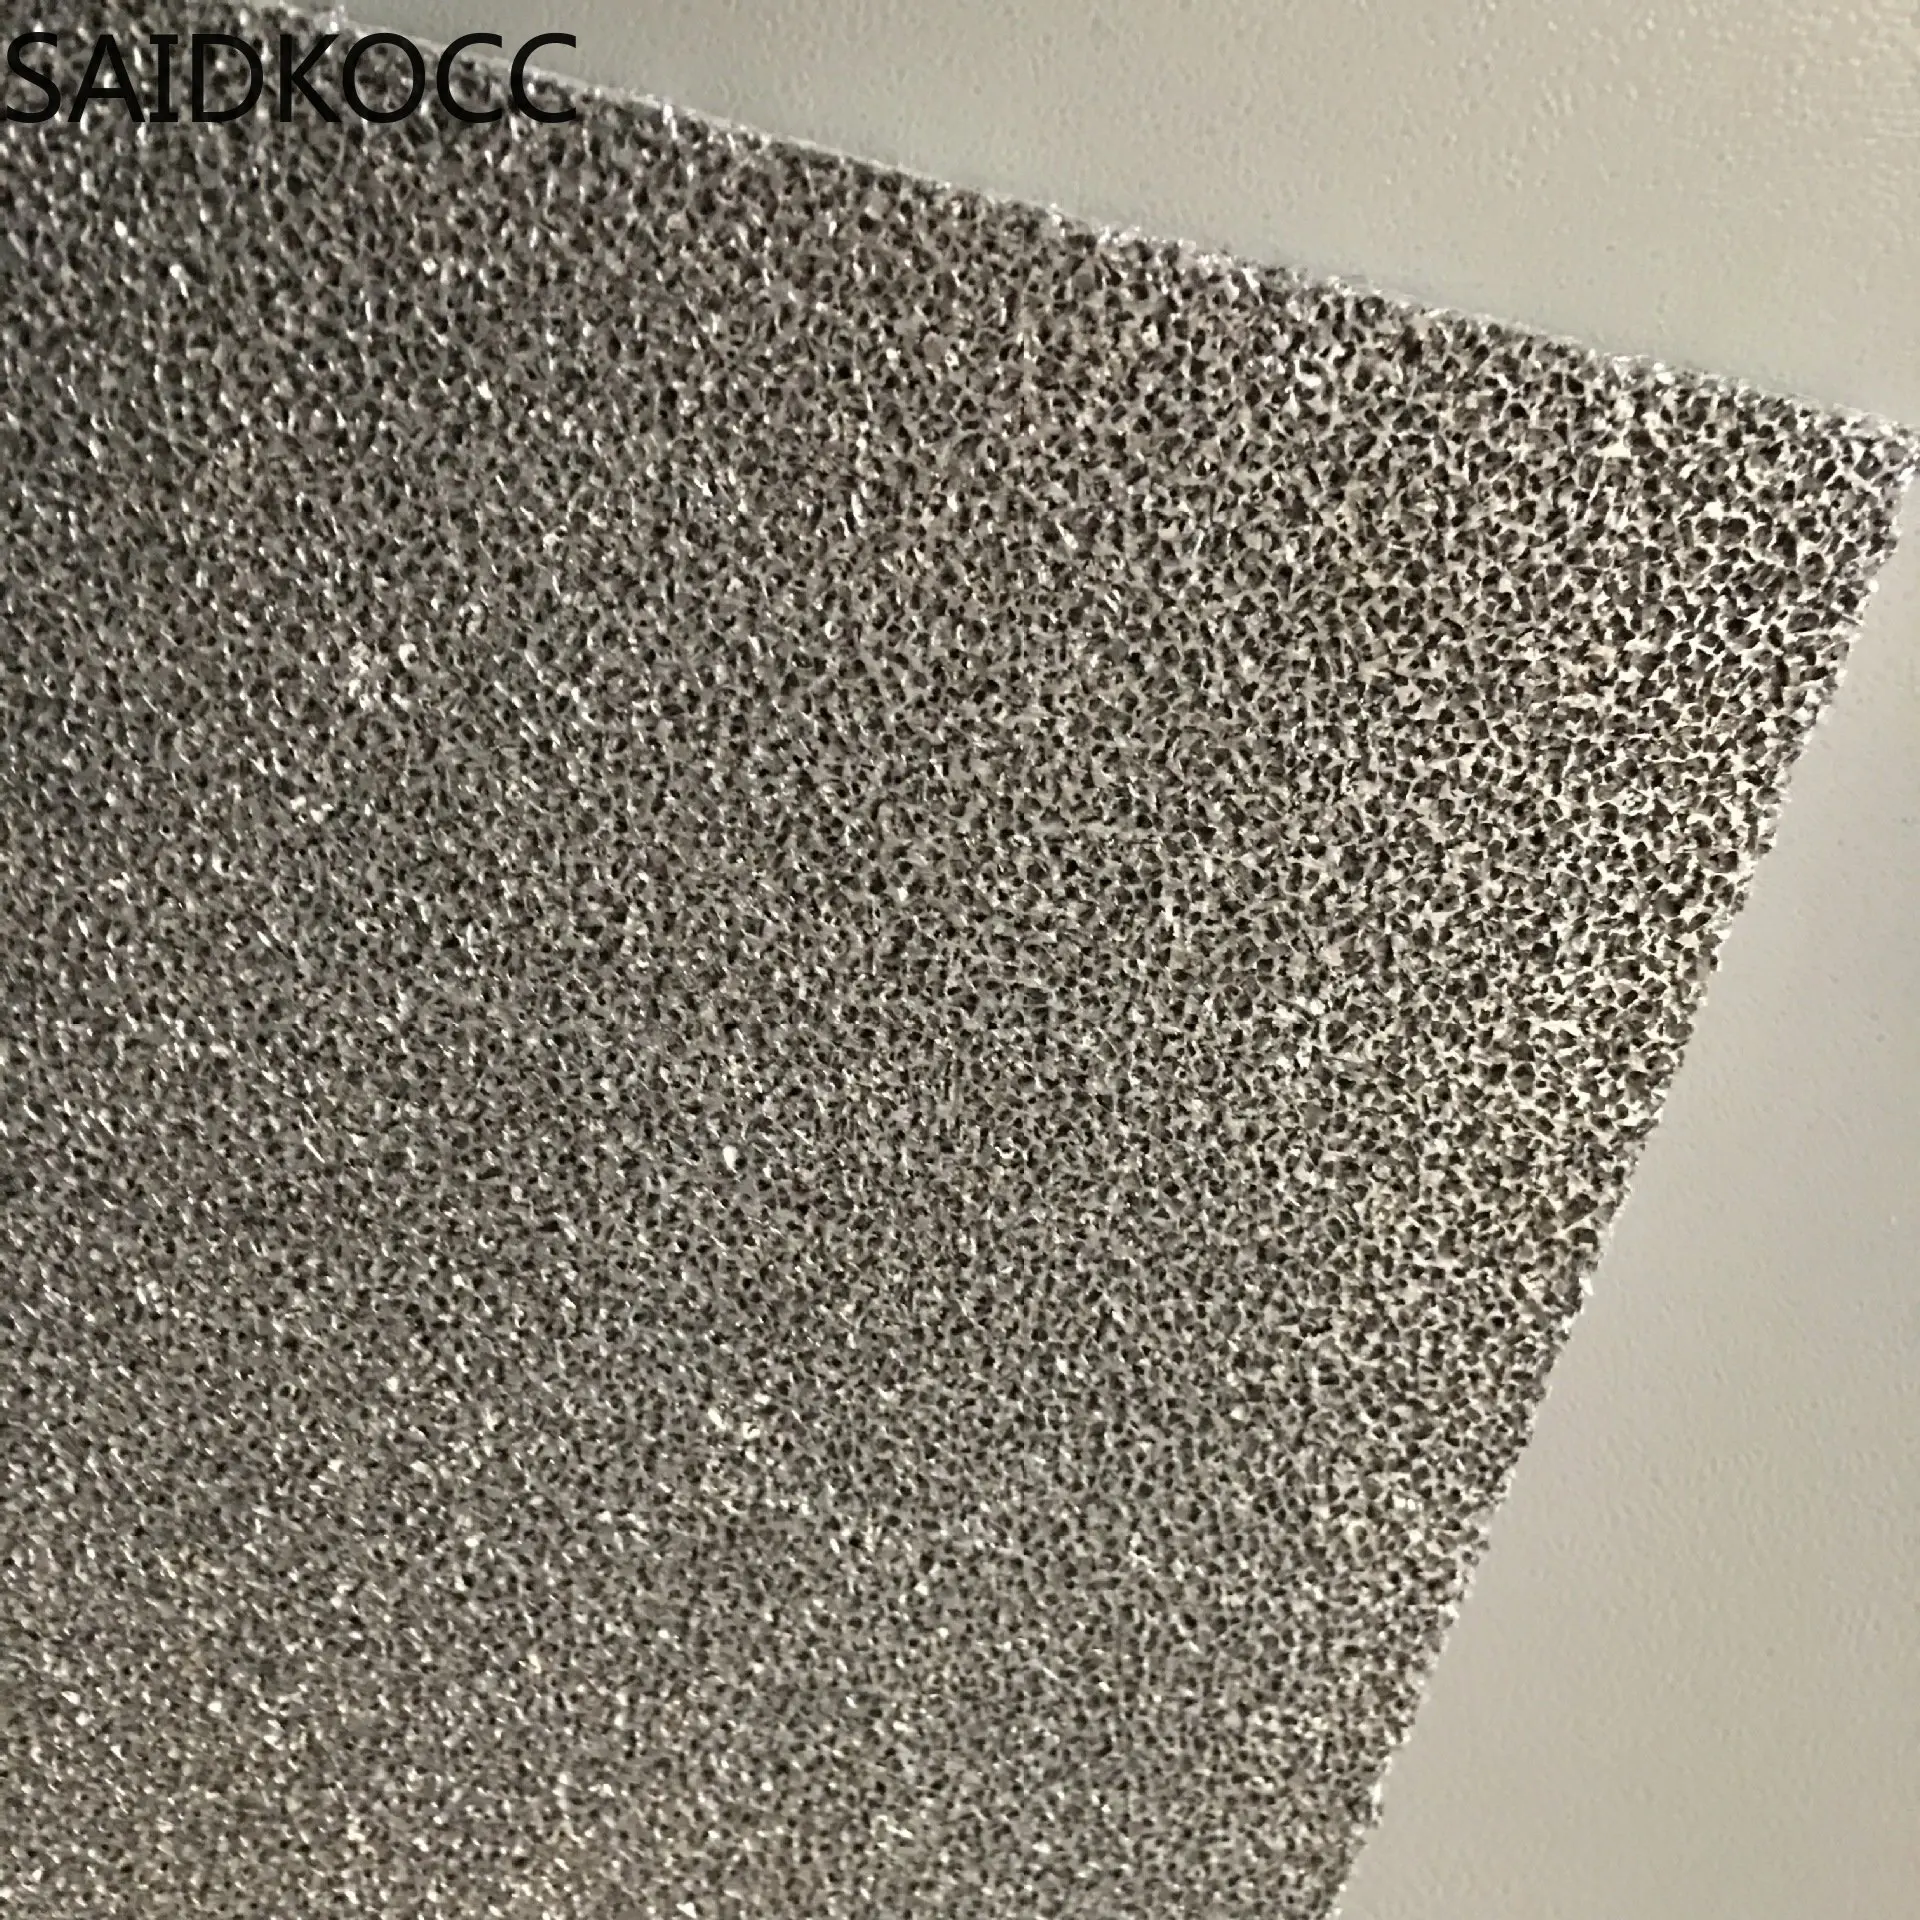 SAIDKOCC Wholesale Open Cell Customizable Size Thickness Aluminum Al Foam Sheet Panels Sound Insulation Material